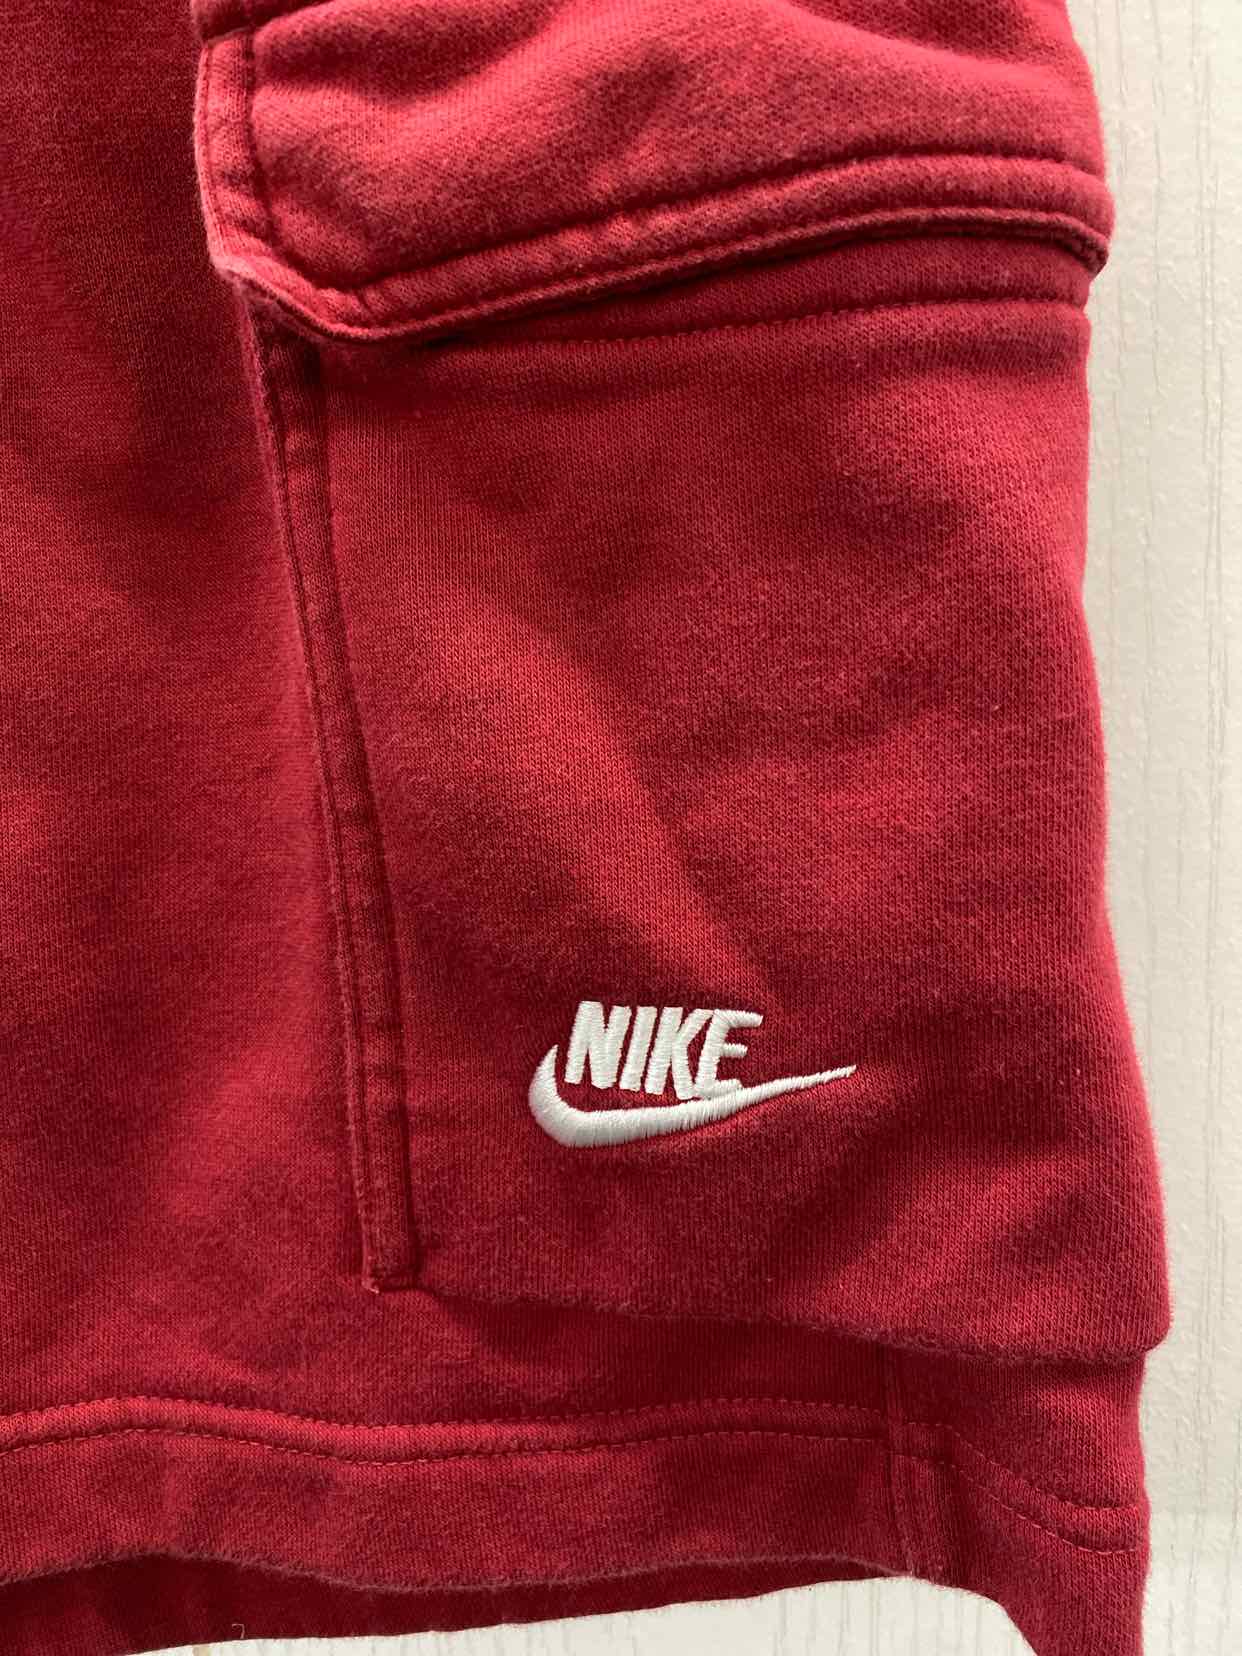 Nike Size 30 Mens Shorts